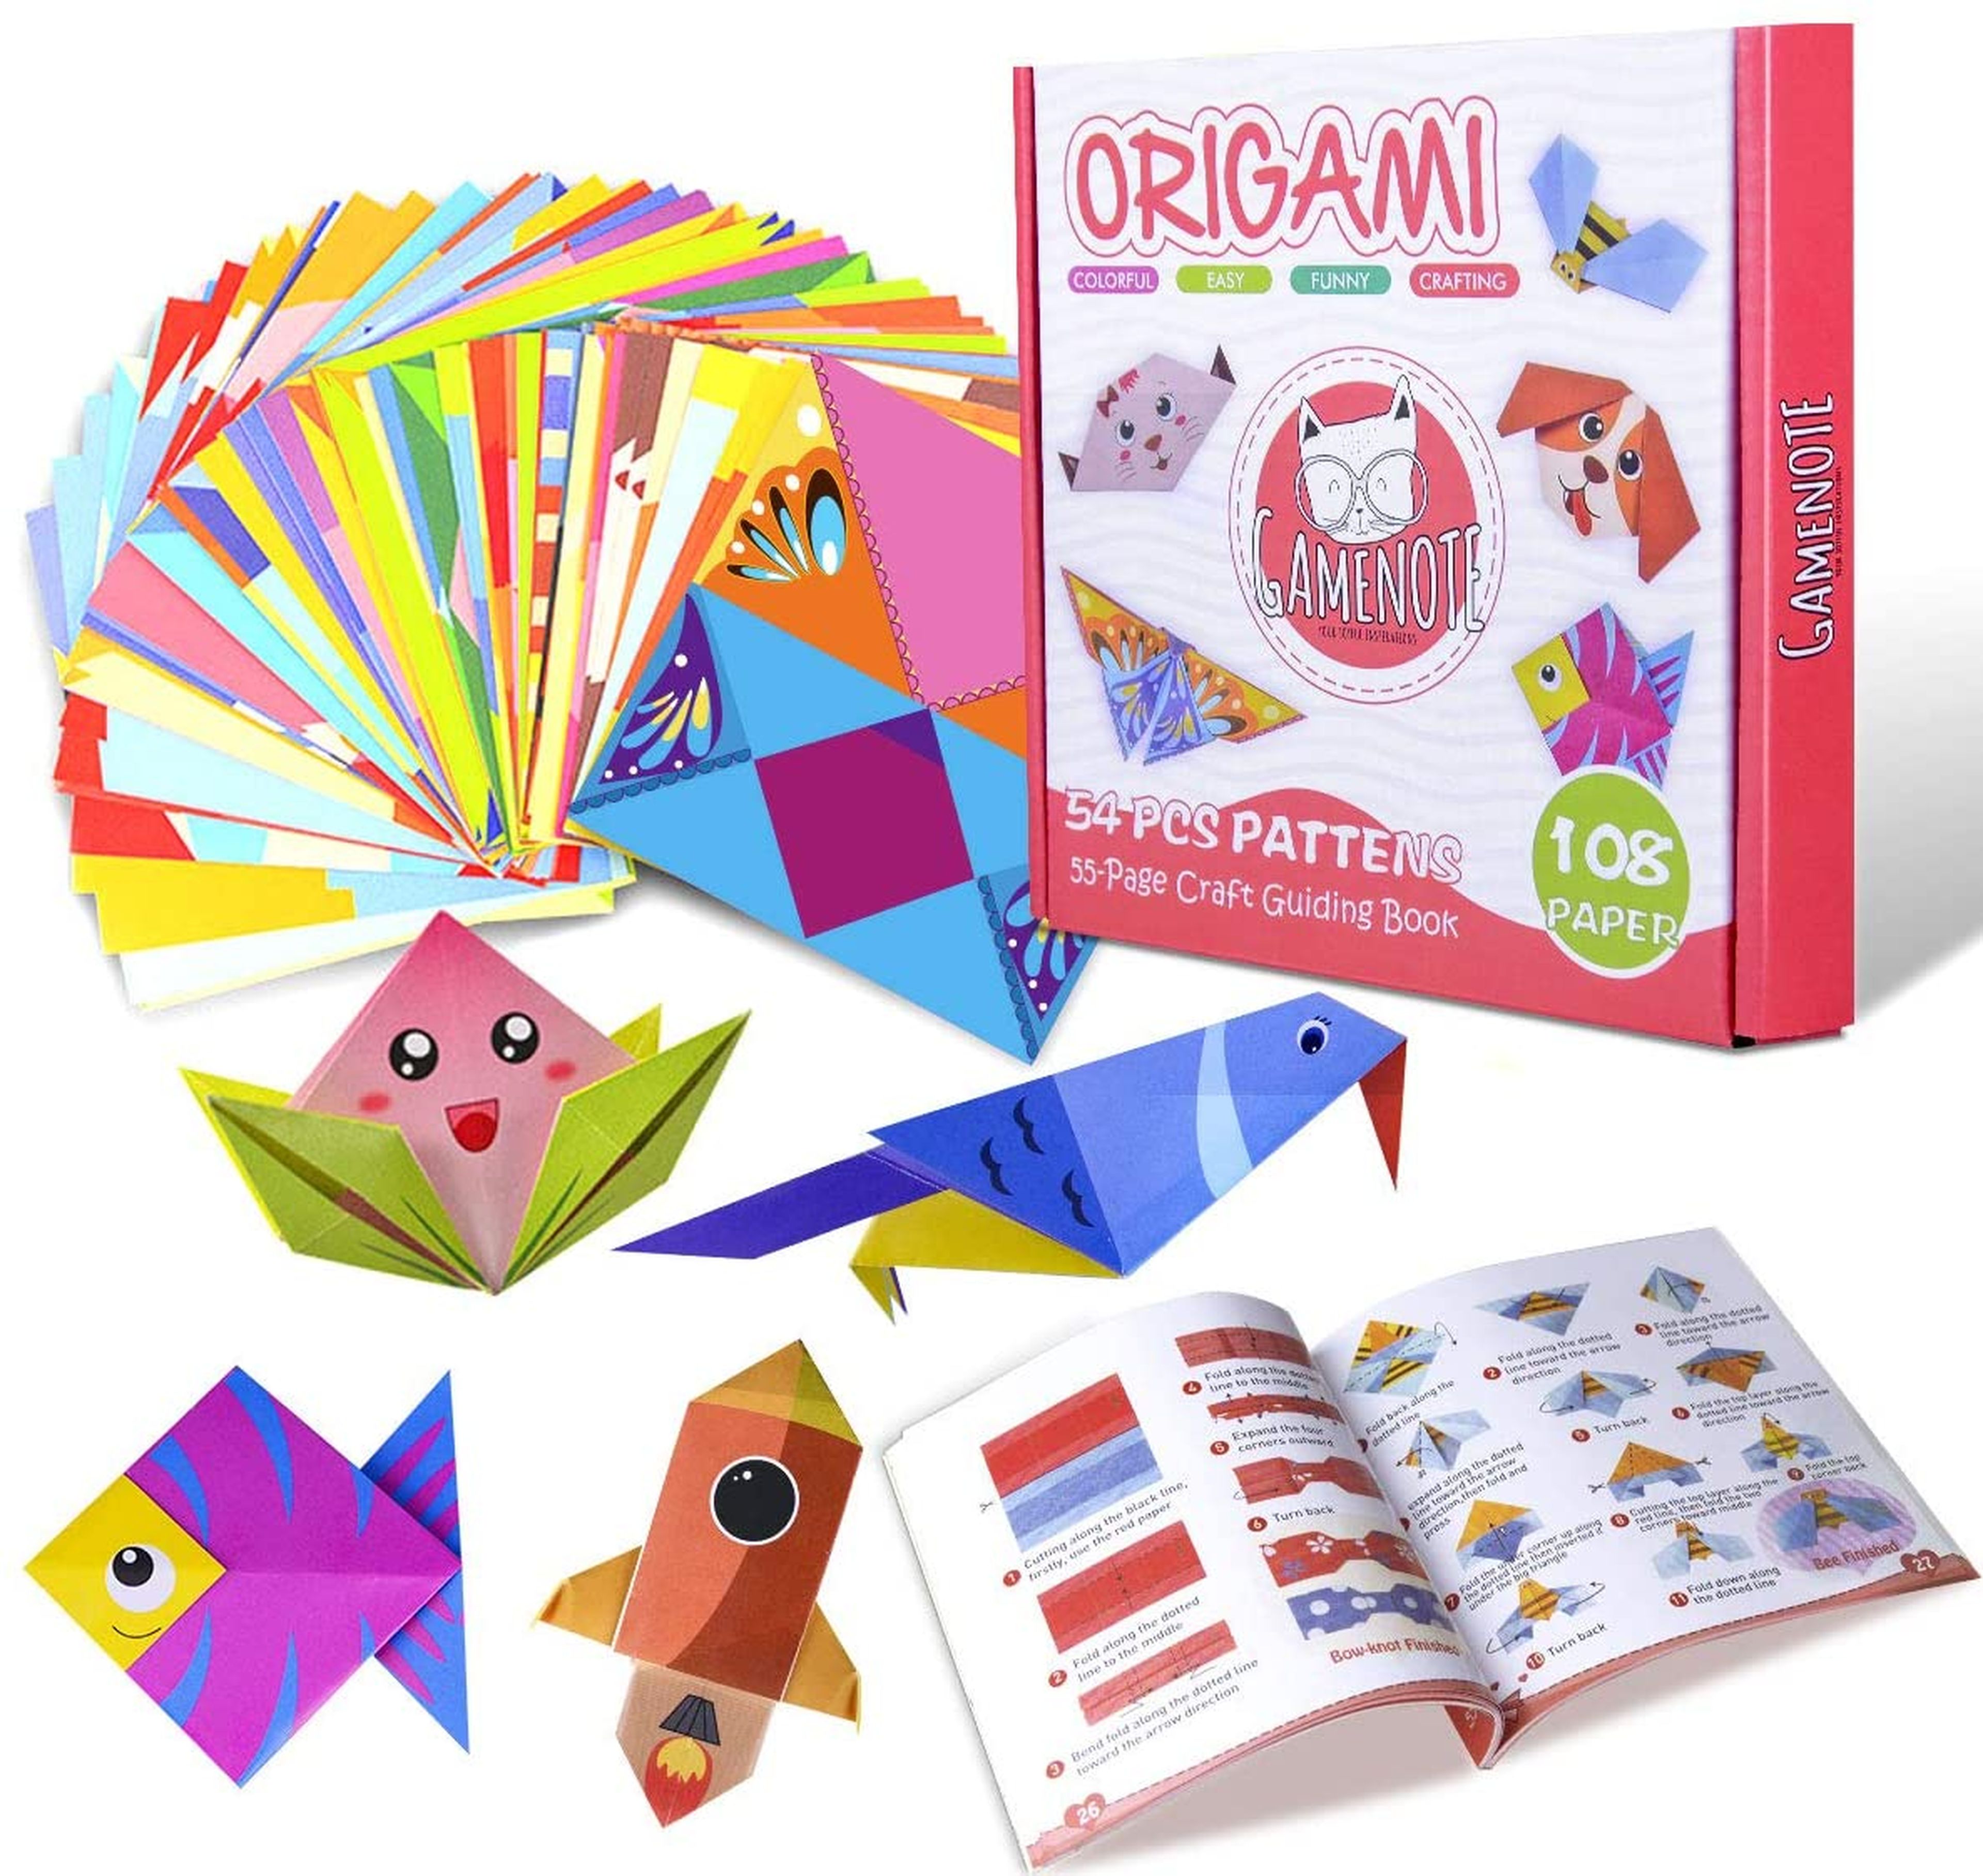 Kit de origami Gamenote